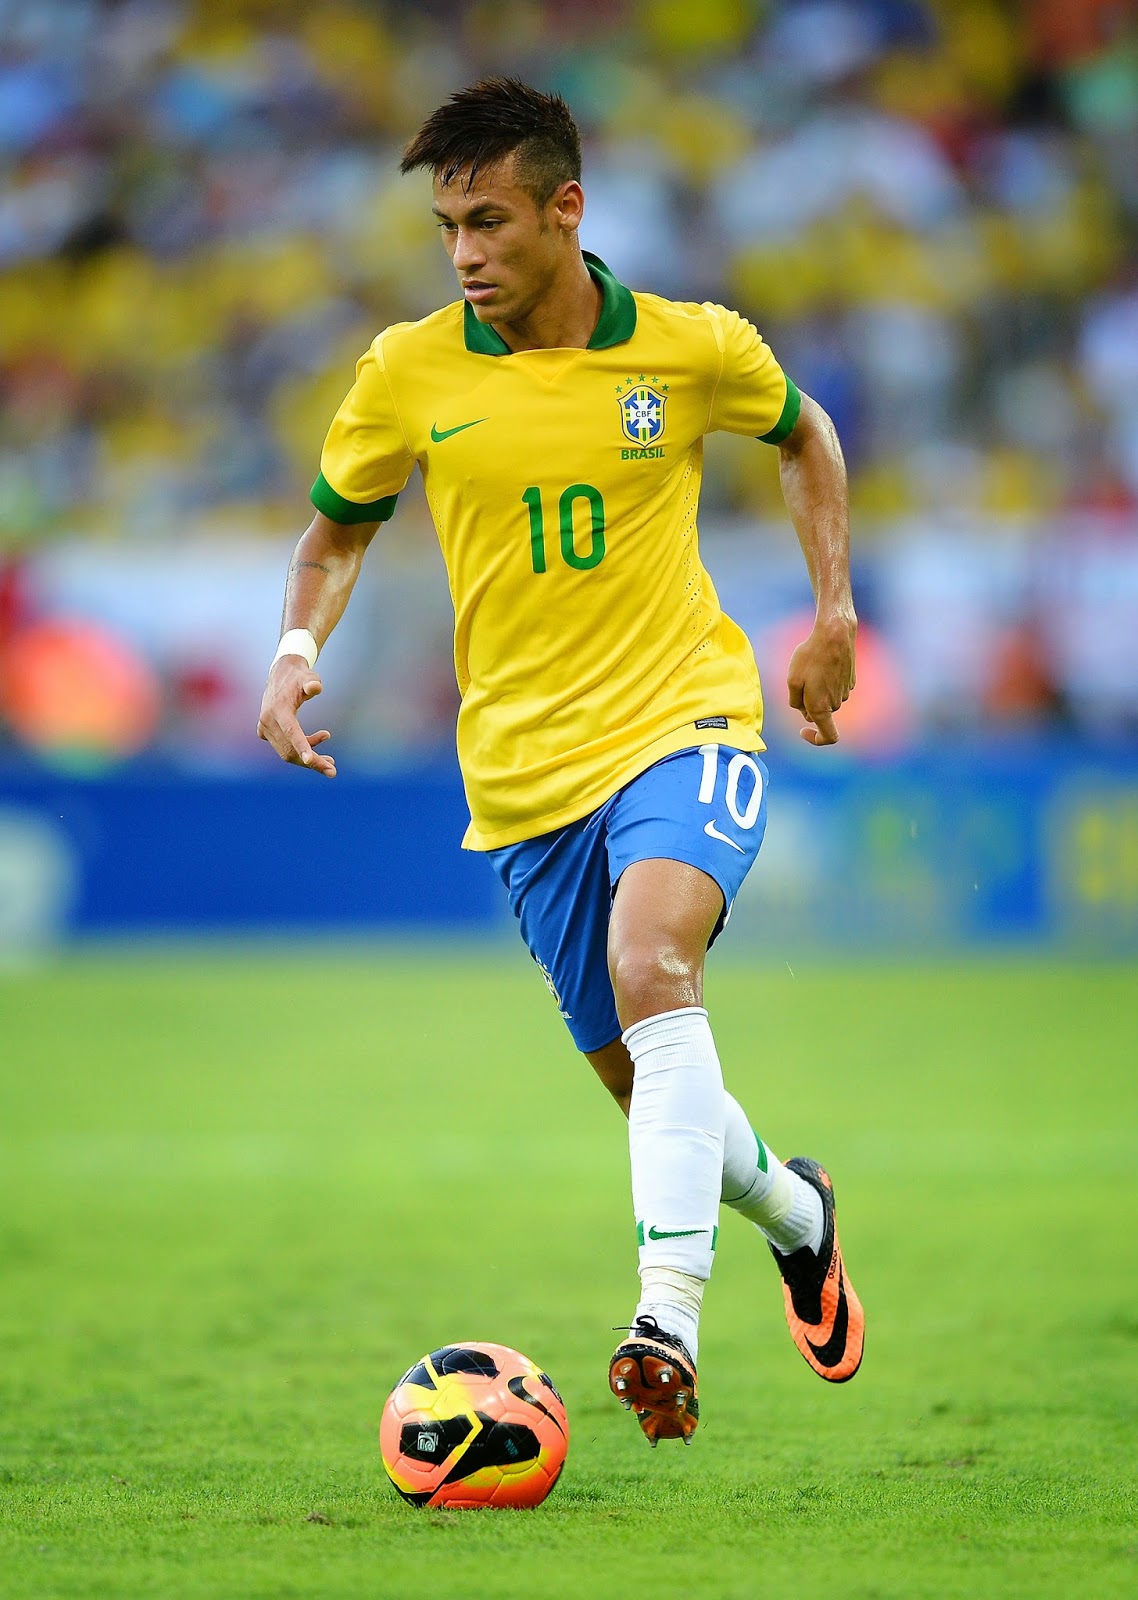 ALL SPORTS PLAYERS: Neymar Jr Very Great Footballer 2014